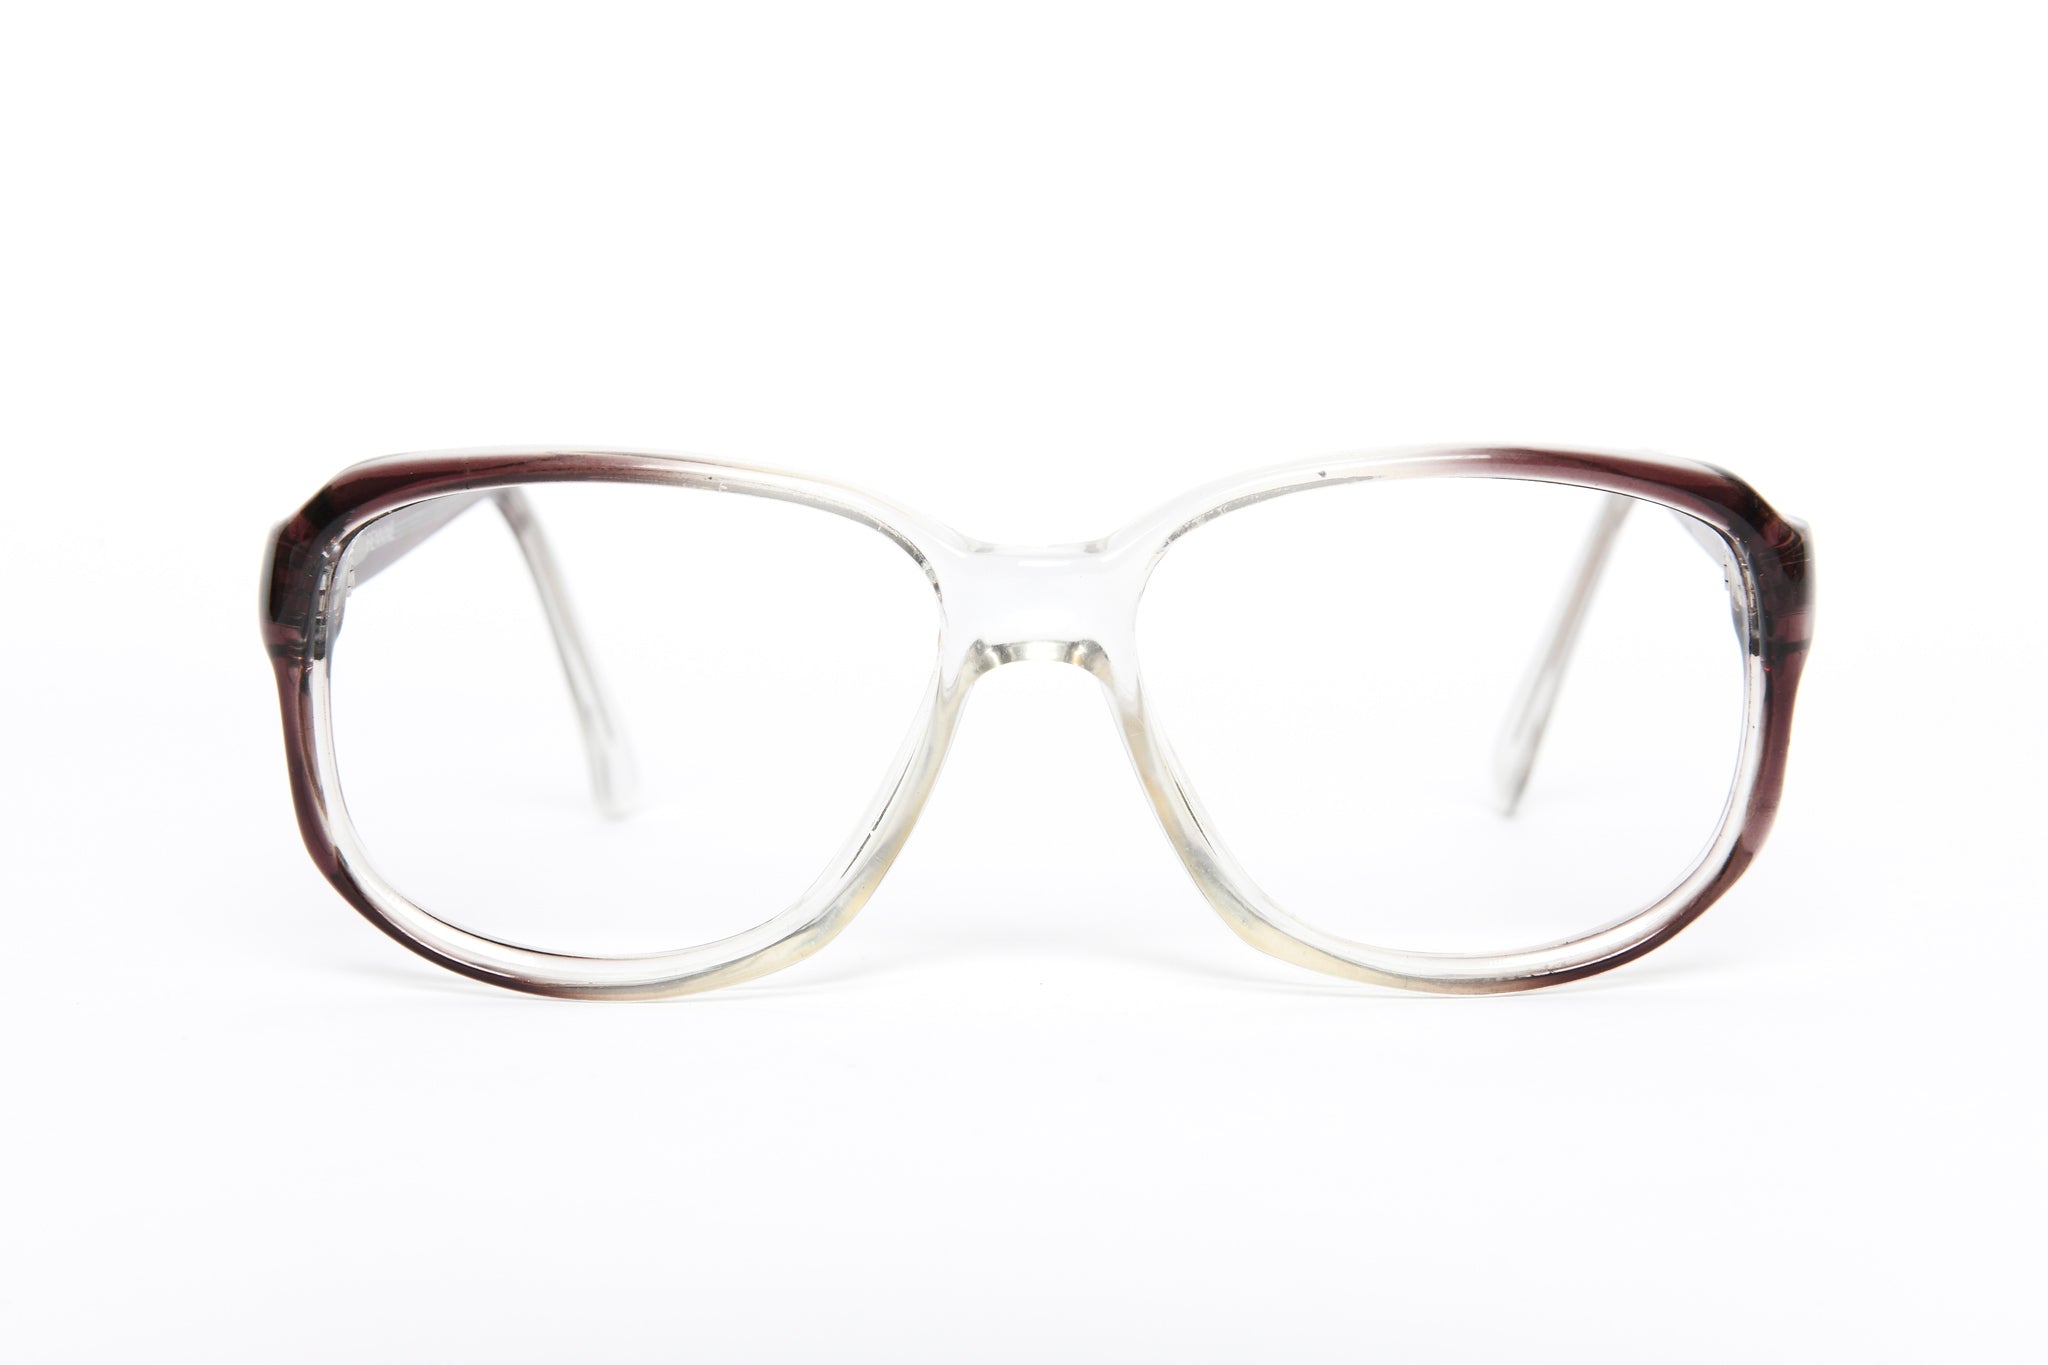 Mens 70s retro glasses. Mens 80s vintage glasses. Mens vintage glasses. 